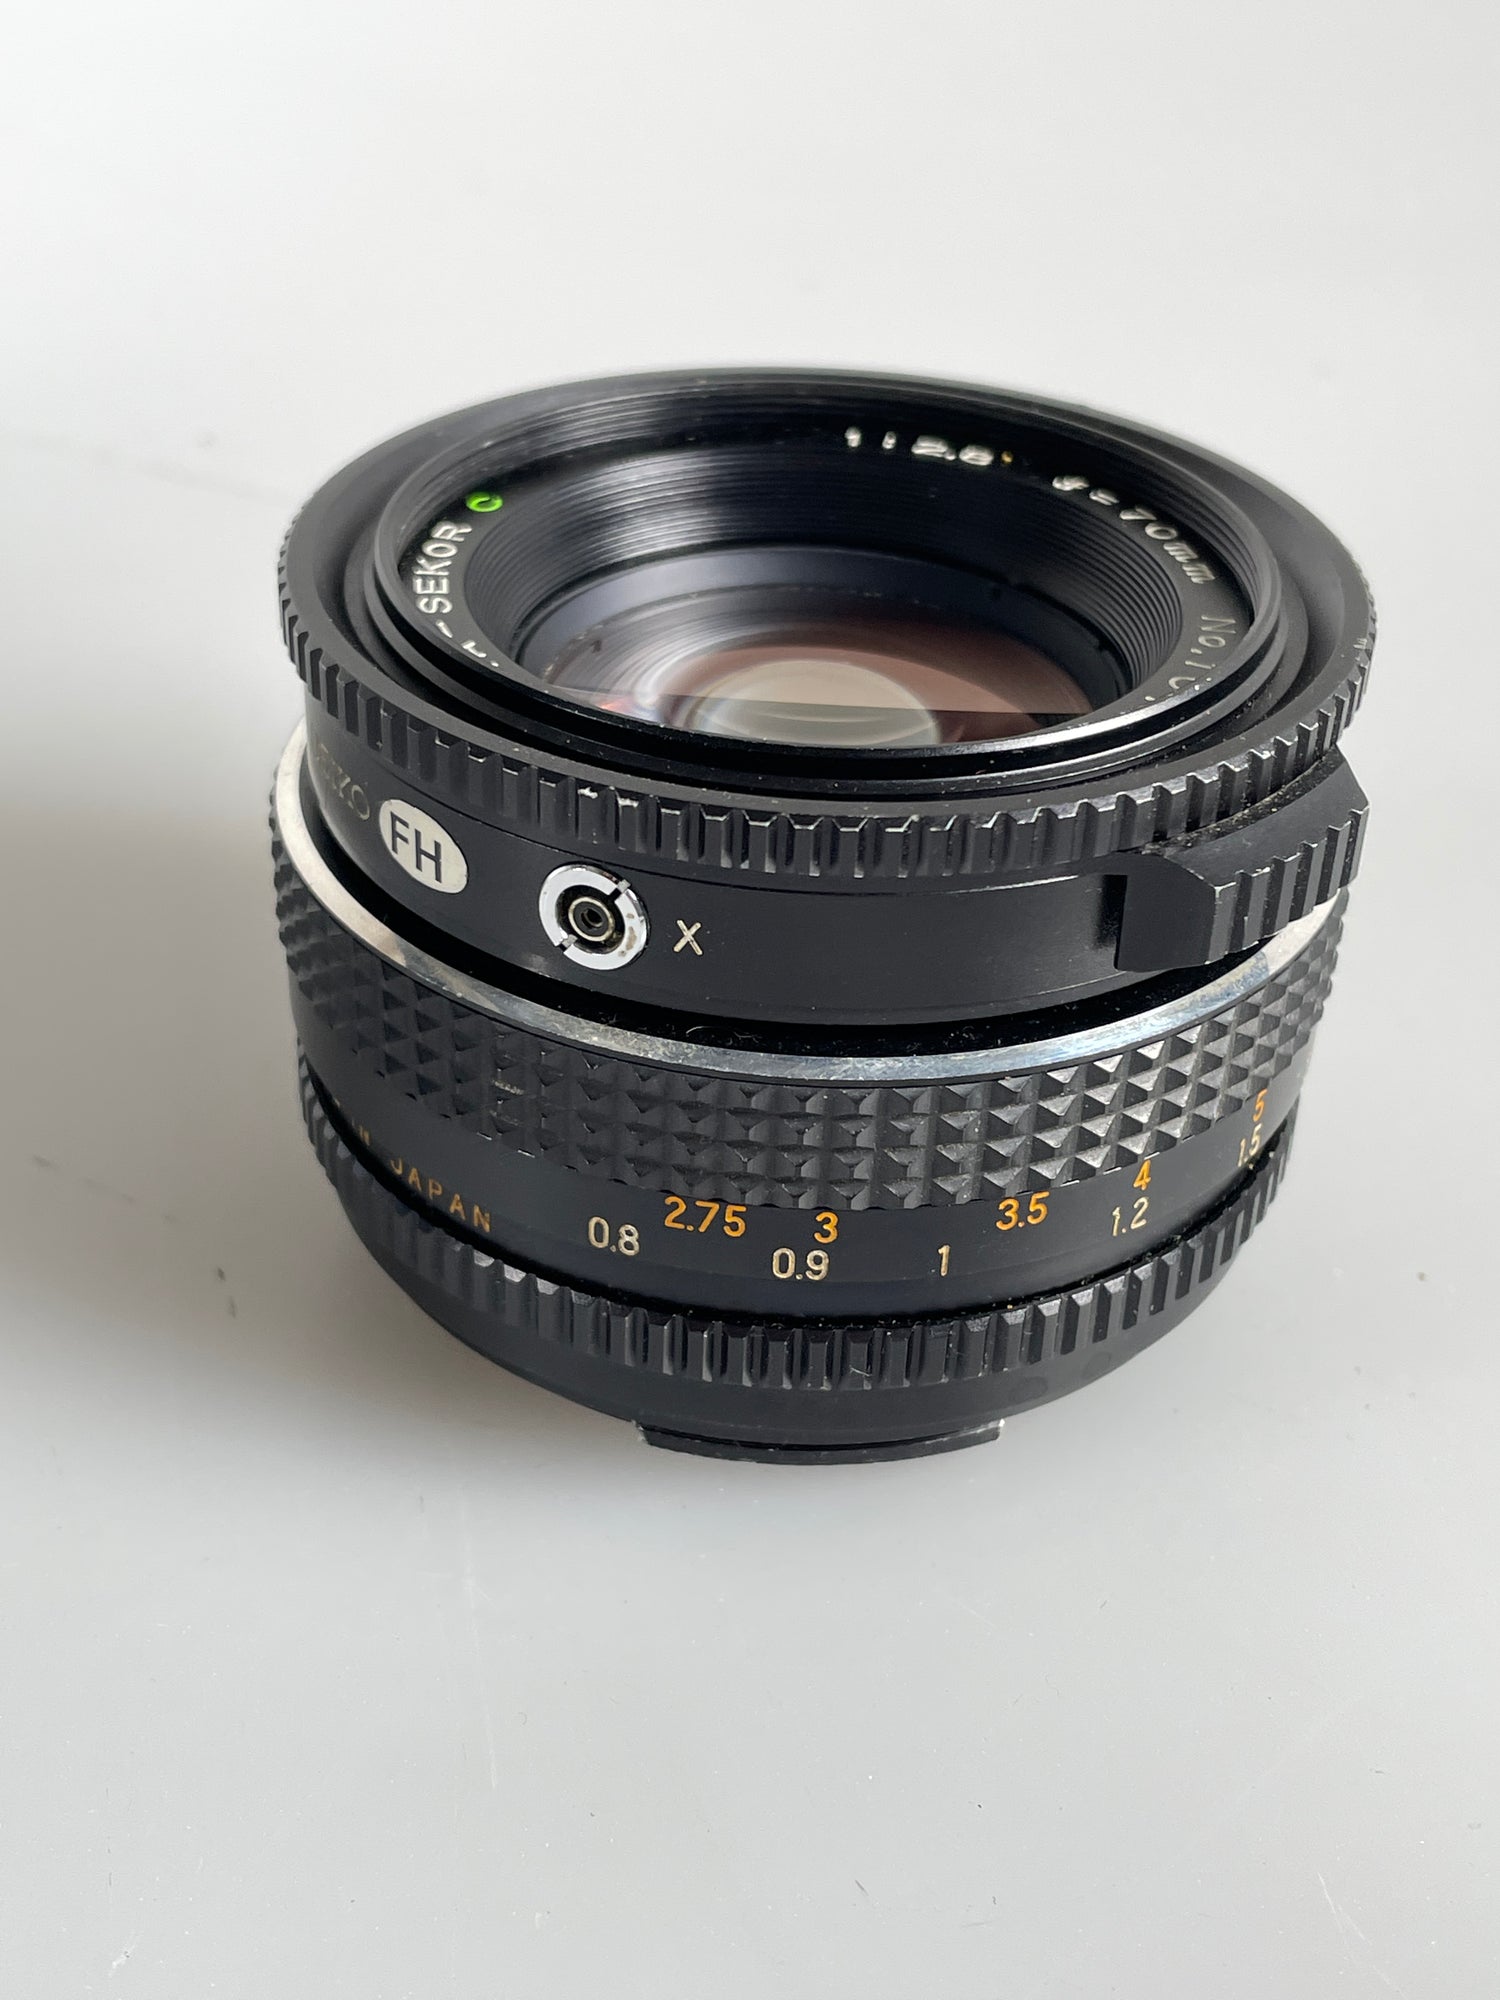 Mamiya Sekor C 70mm f2.8 Lens LS Shutter for M645 1000S super 